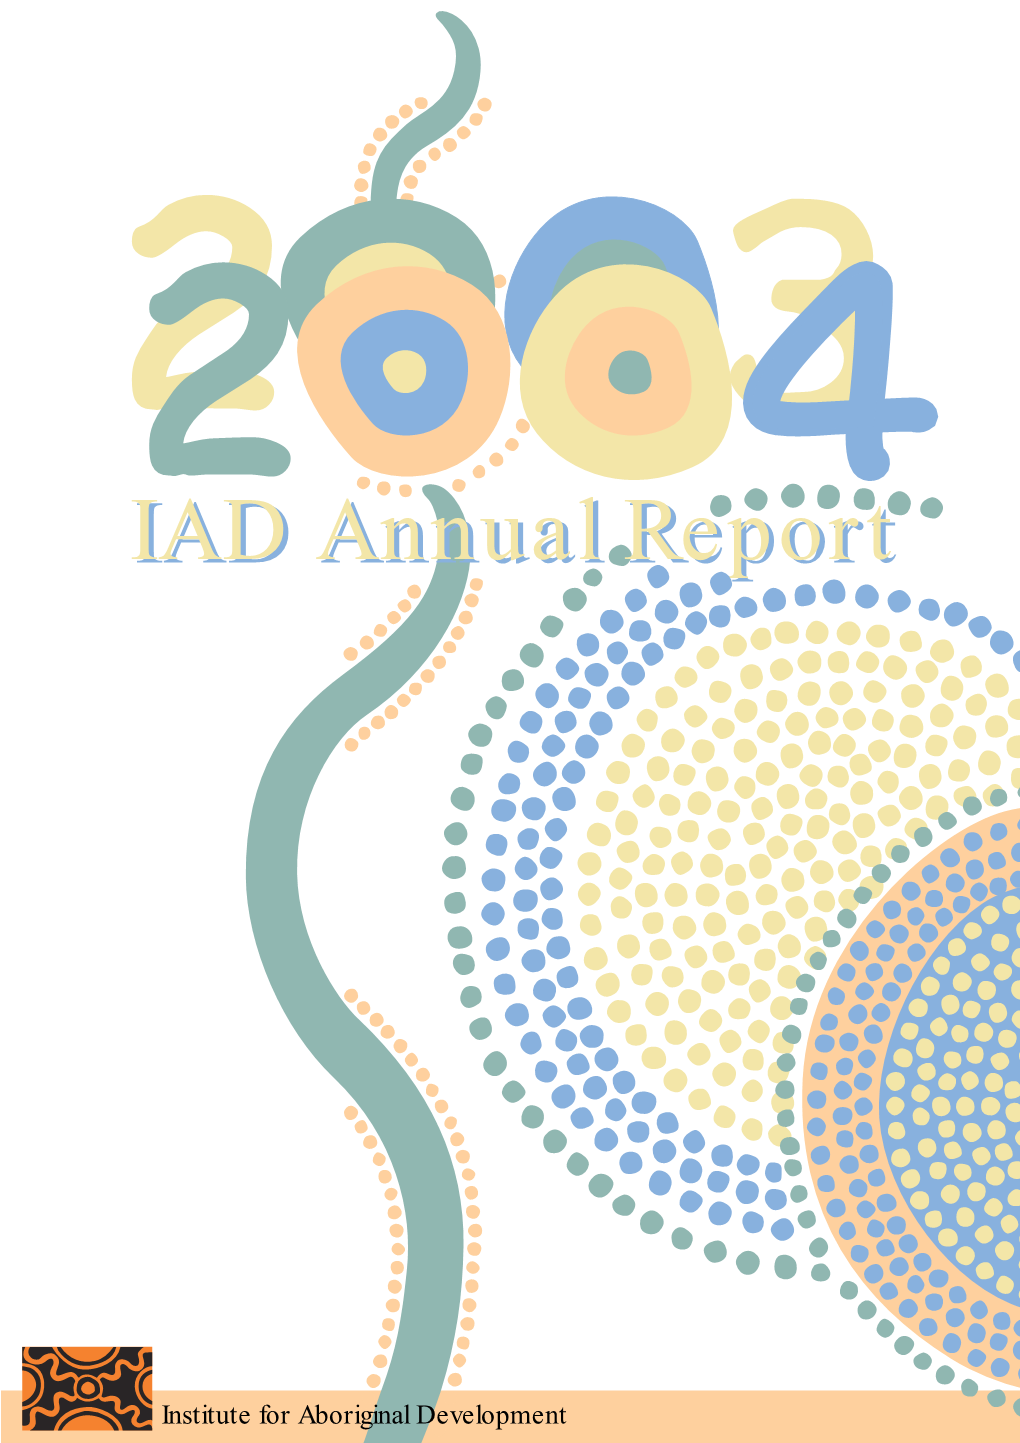 IAD Annual Report